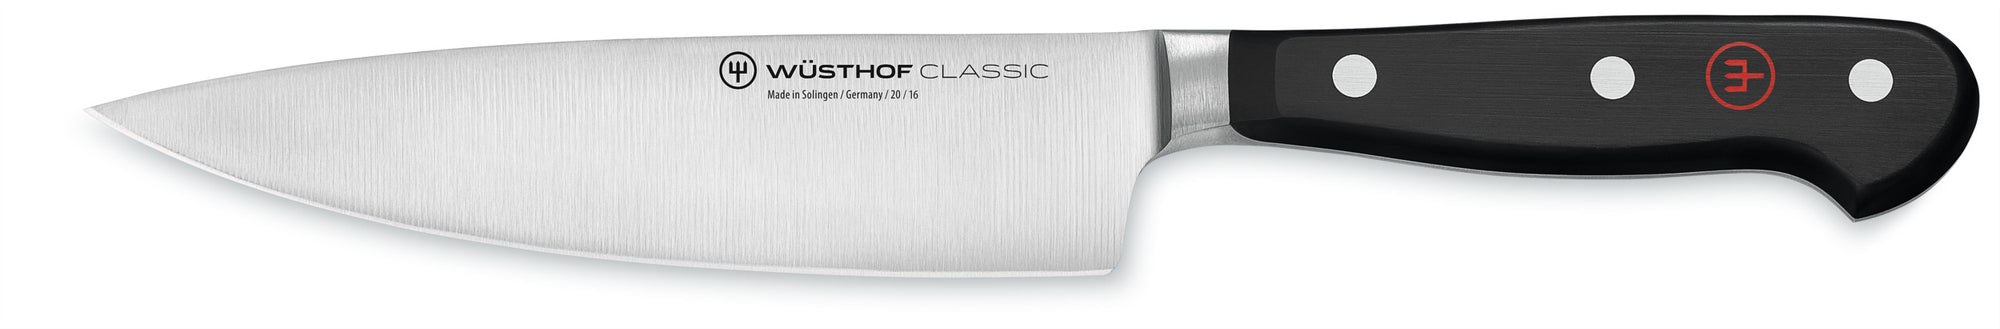 Wusthof Canada Classic Cook's Knife, Half Bolster, 6-inch (16 cm) - 4581-16